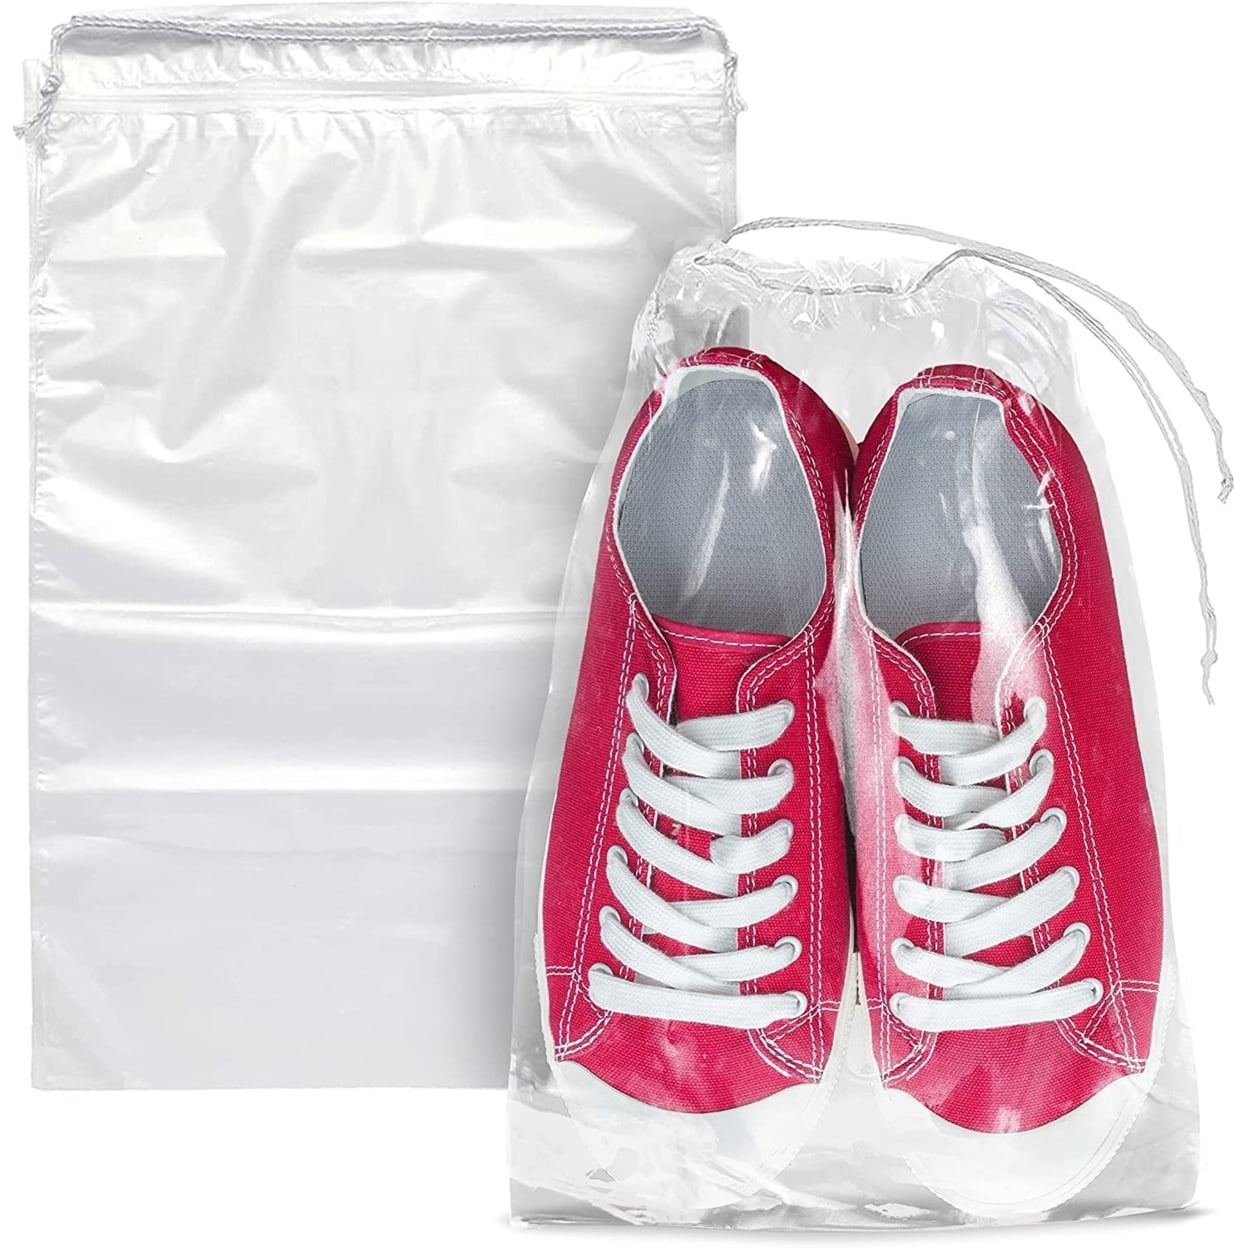 Travel Transparent Bag Ziplock, Zip Bags Clothes Shoes